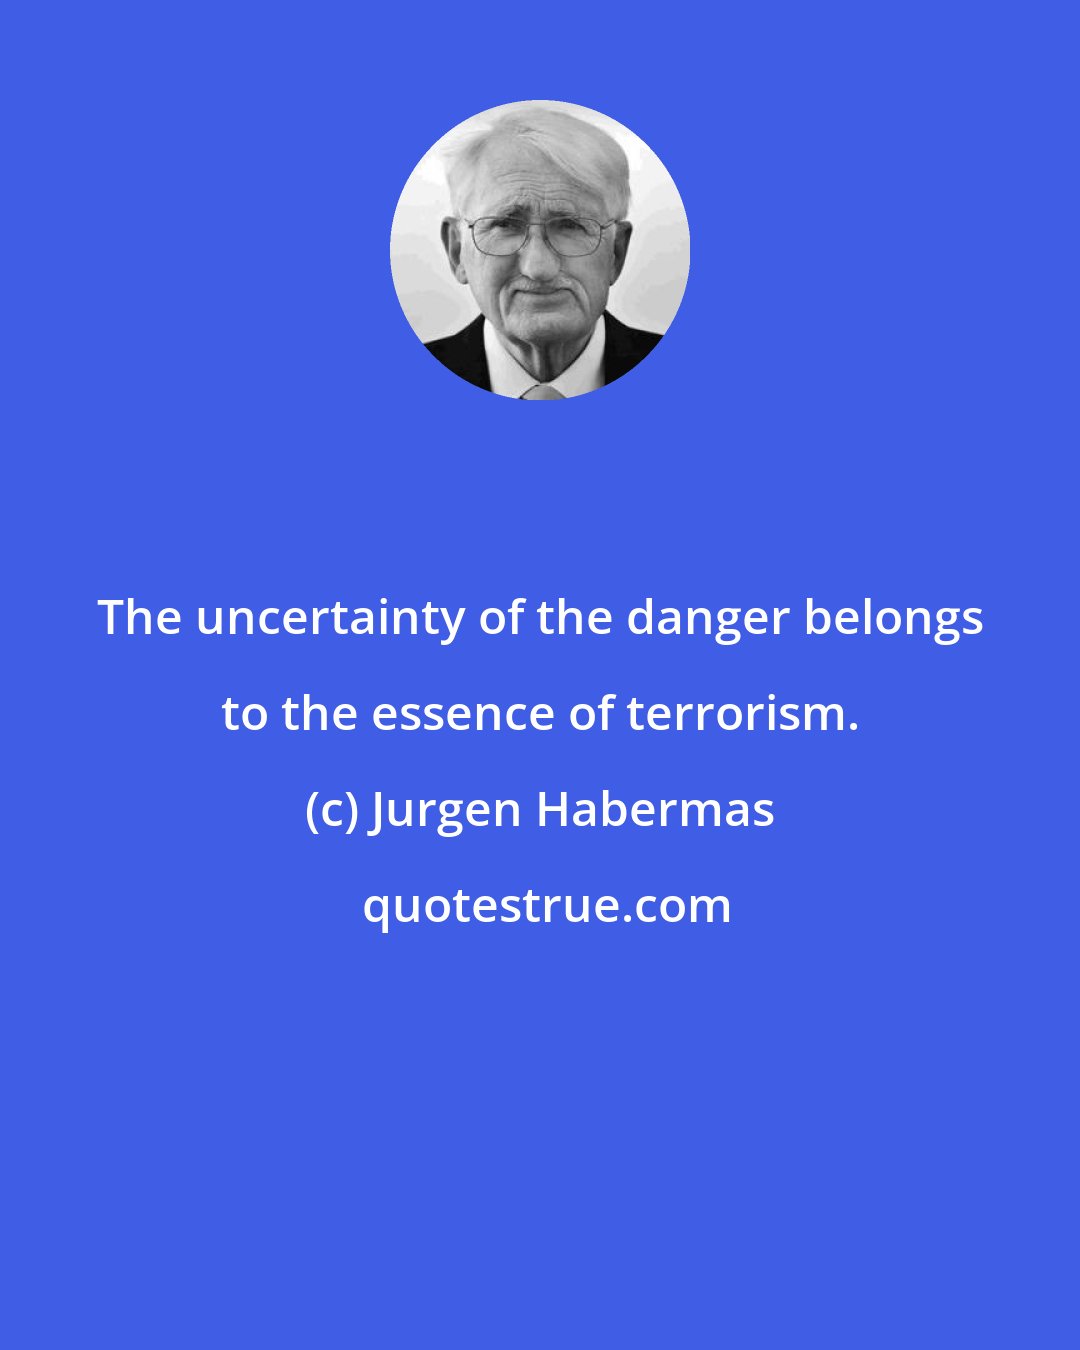 Jurgen Habermas: The uncertainty of the danger belongs to the essence of terrorism.